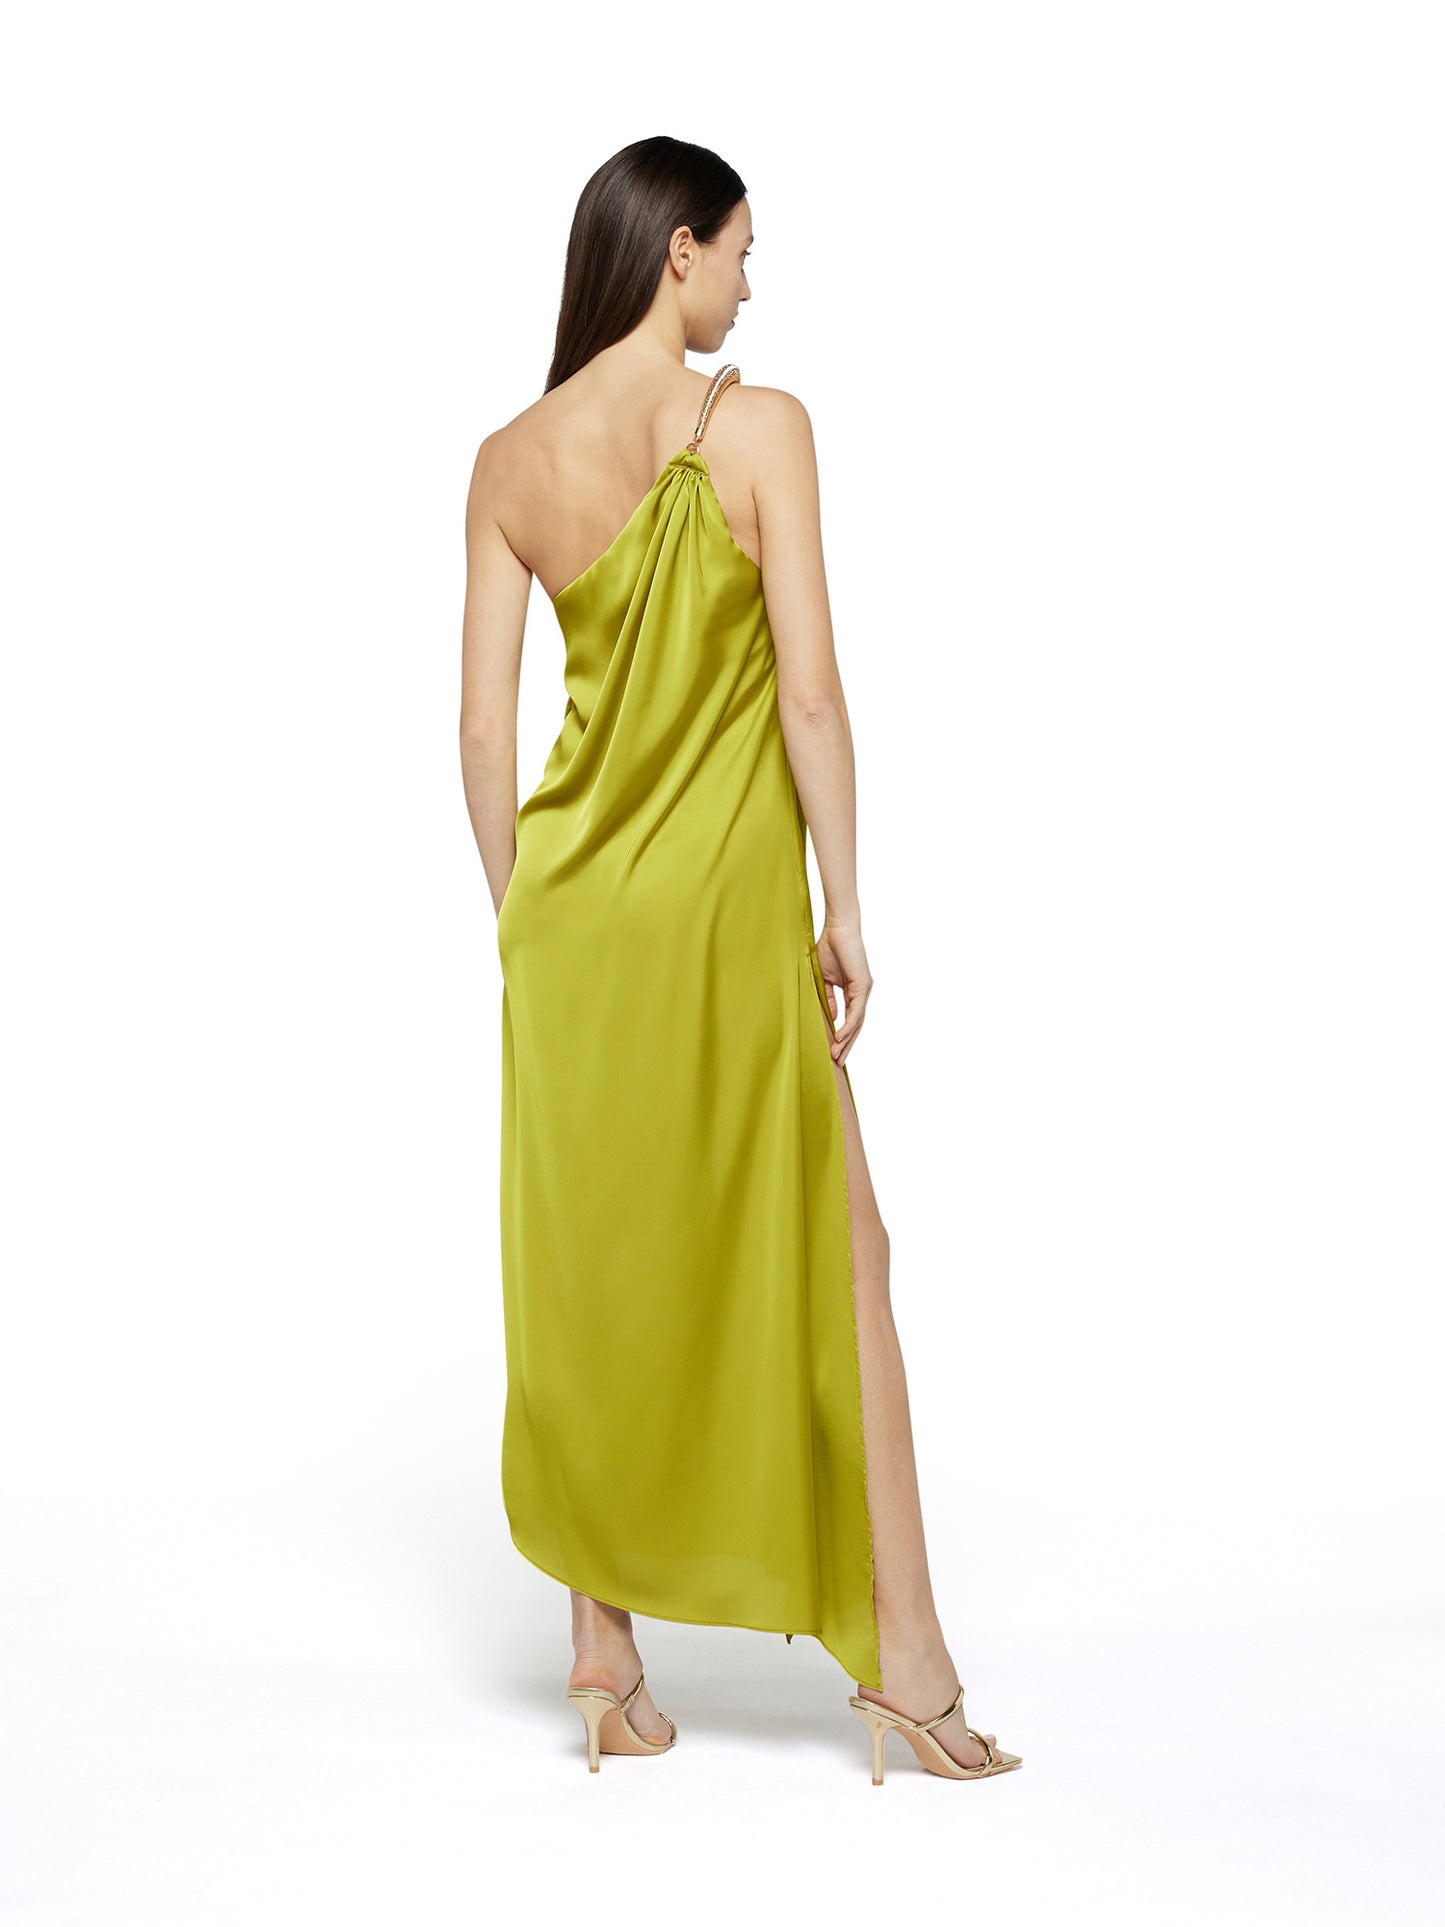 One-shoulder long dress in fluid satin